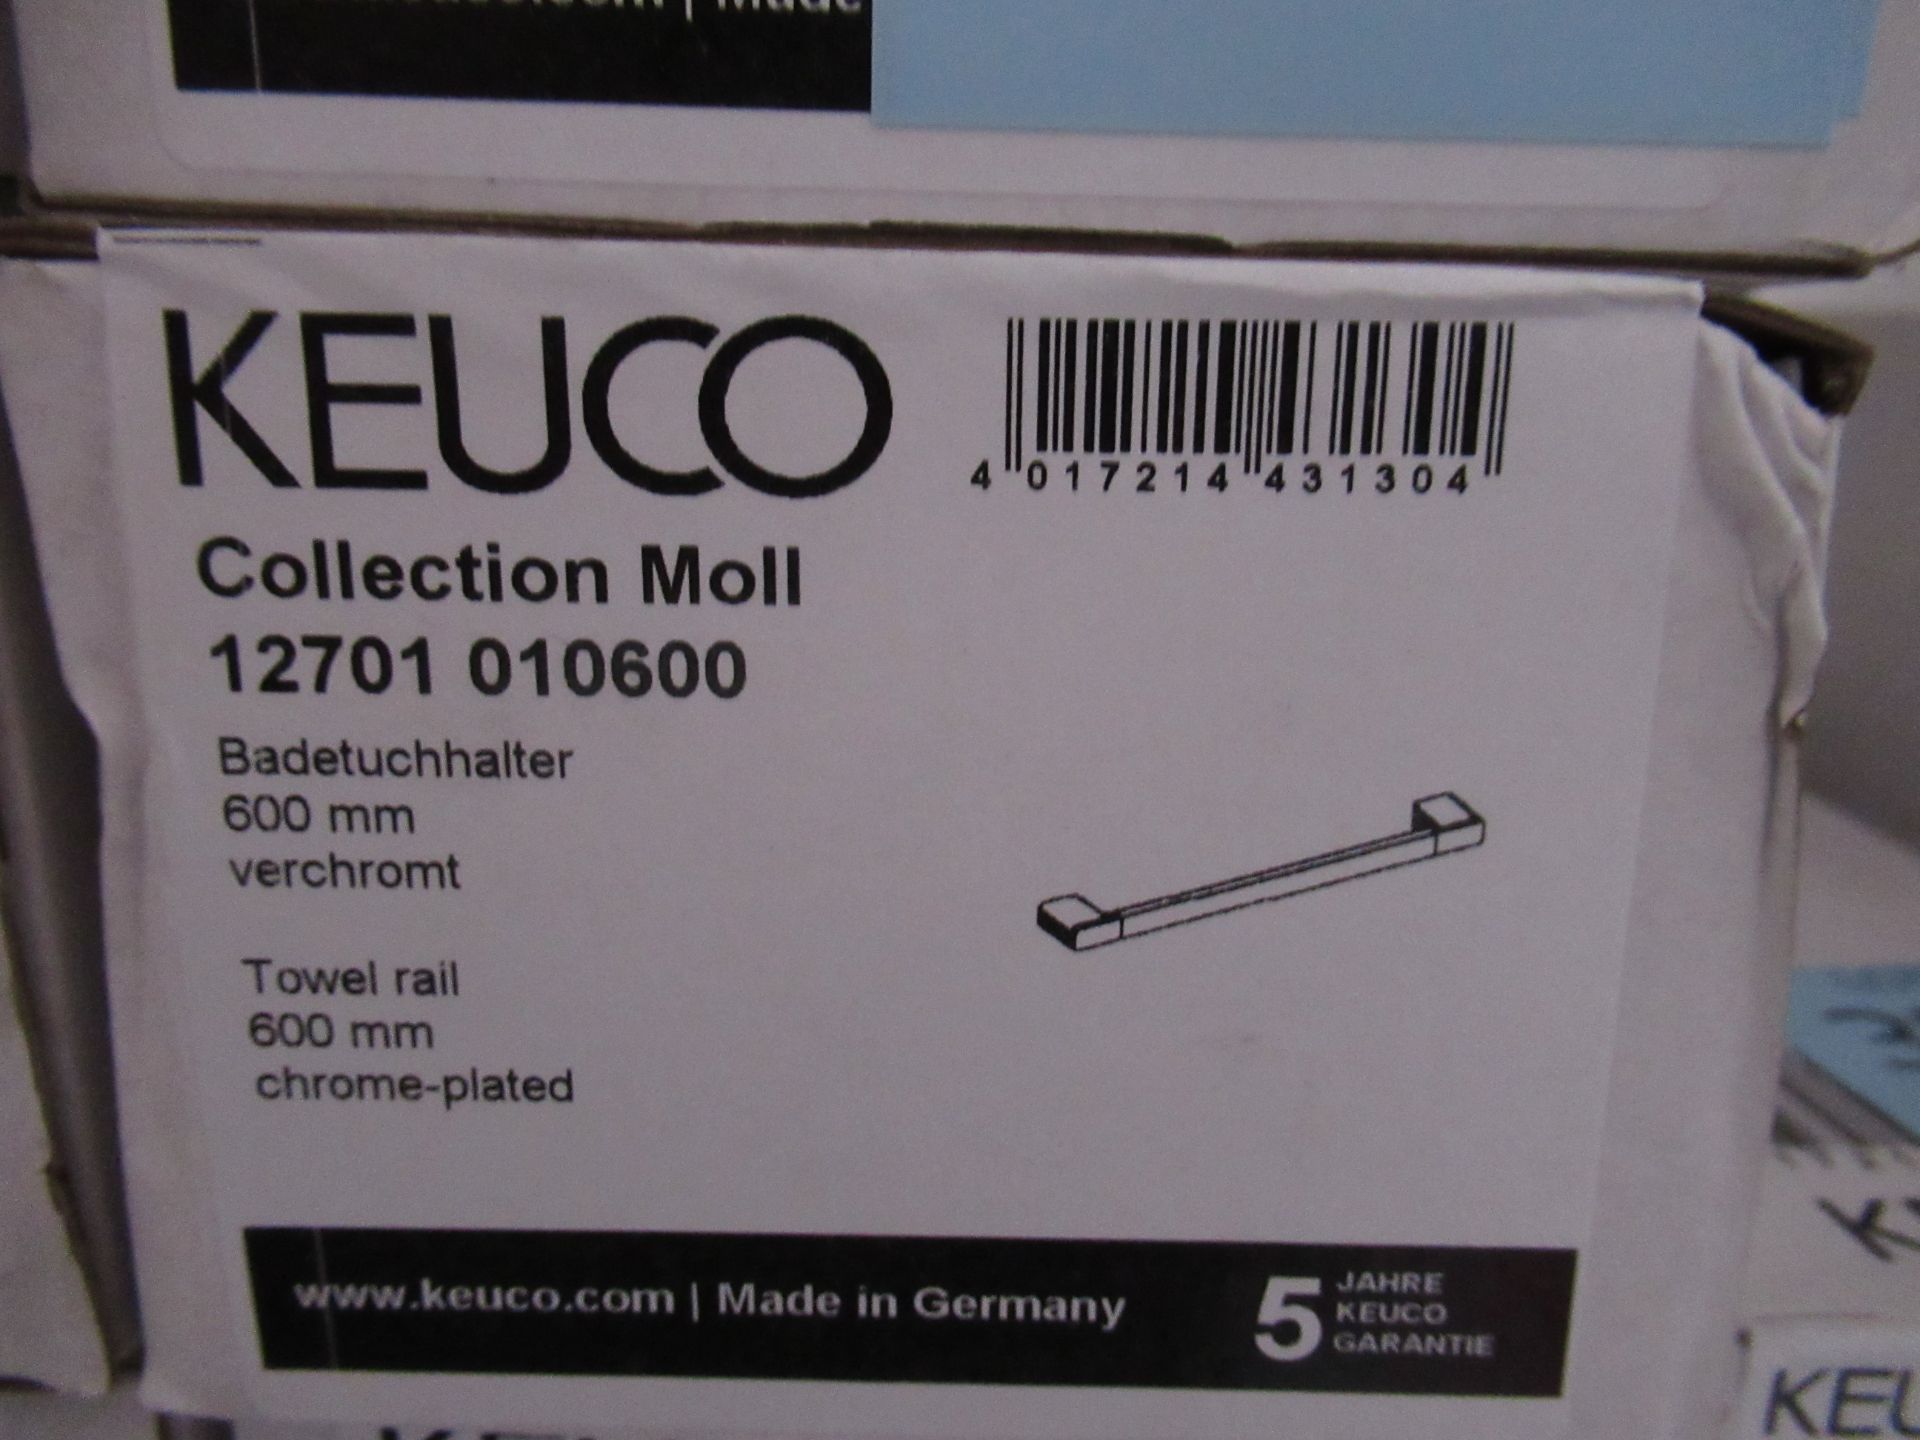 4 x Keuco Collection Moll Towel Rail Chrome Plated, P/N 12701-010600 - Image 2 of 2